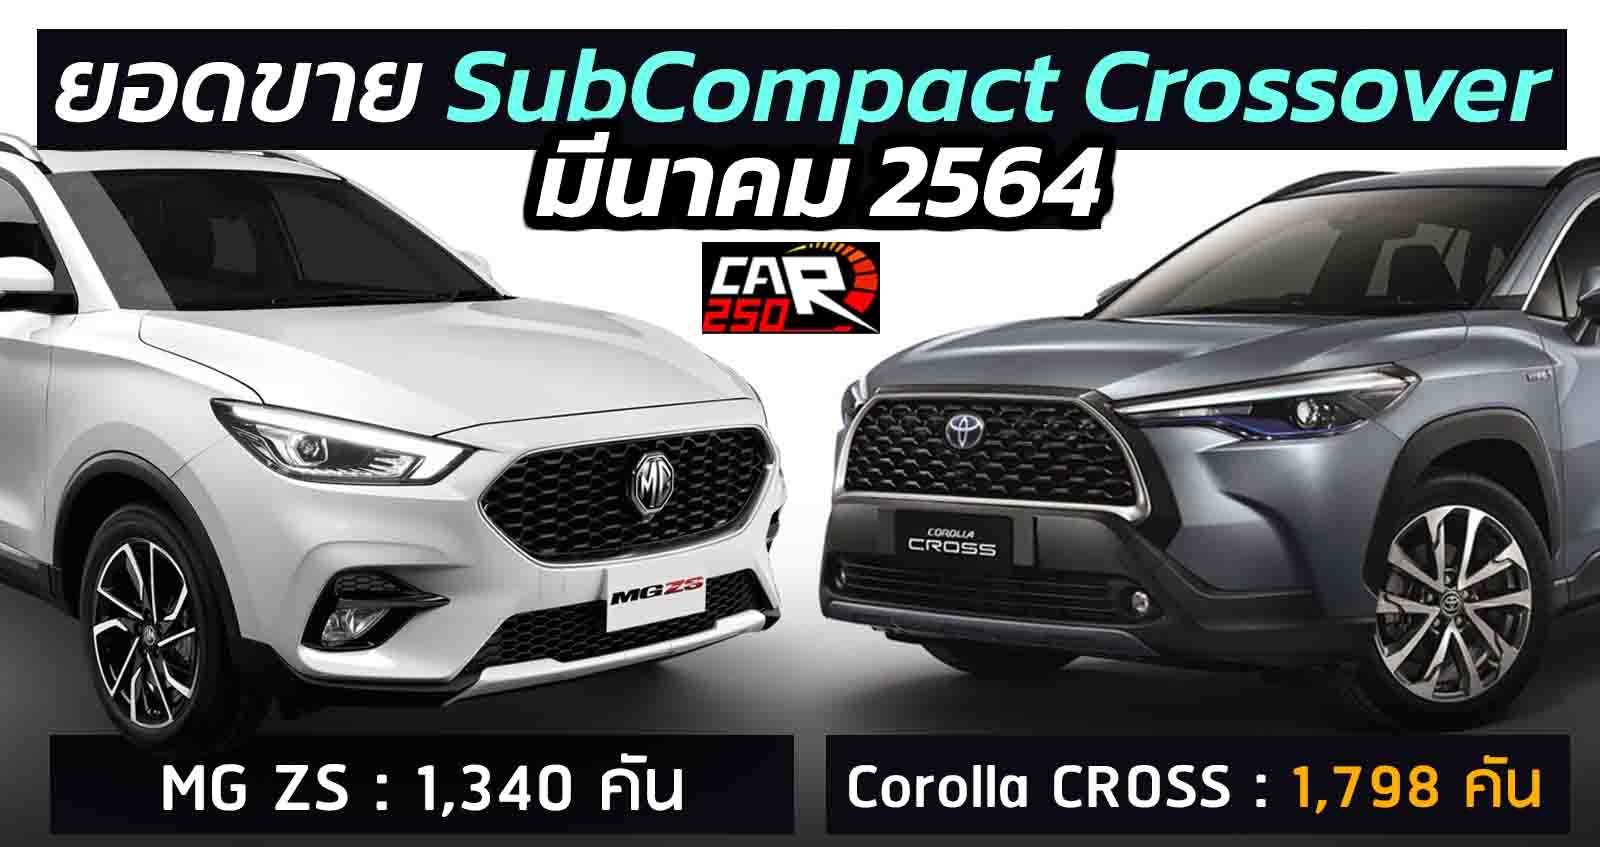 Corolla CROSS ยอดขายอันดับ 1 Subcompact Crossover ปี มีนาคม 2021